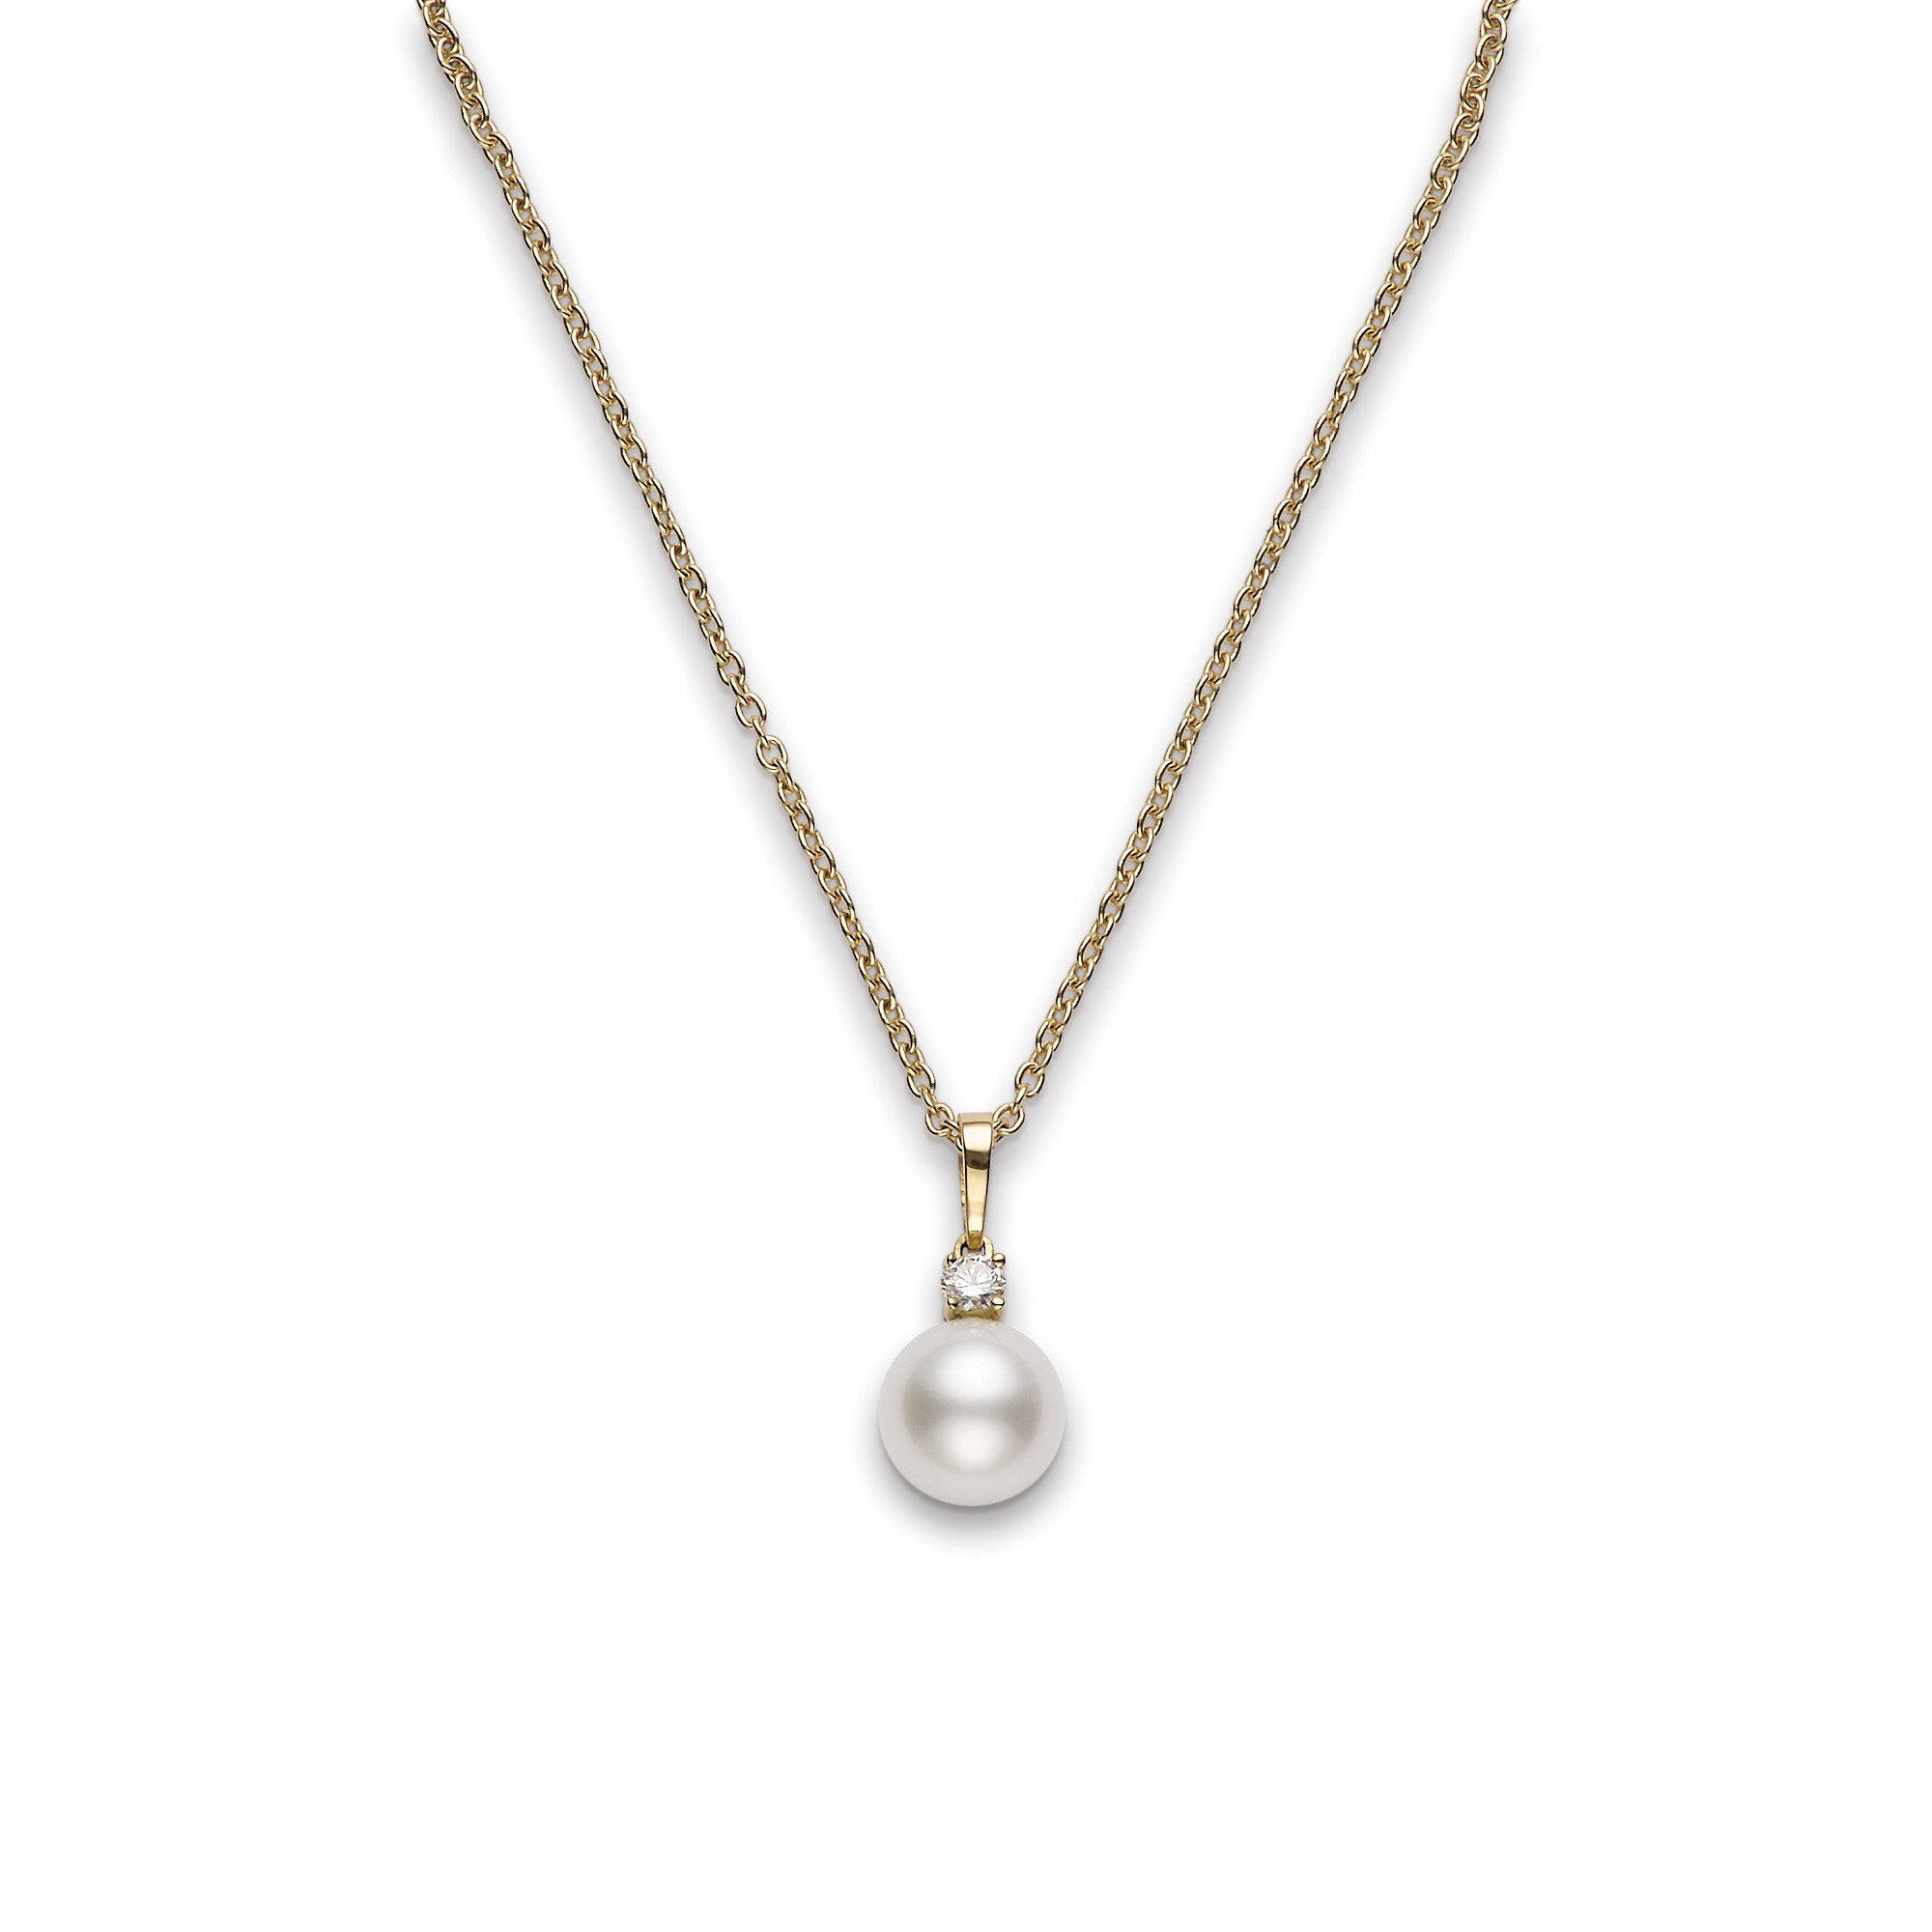 Mikimoto 18k Yellow Gold 11mm White South Sea Pearl Pendant Necklace